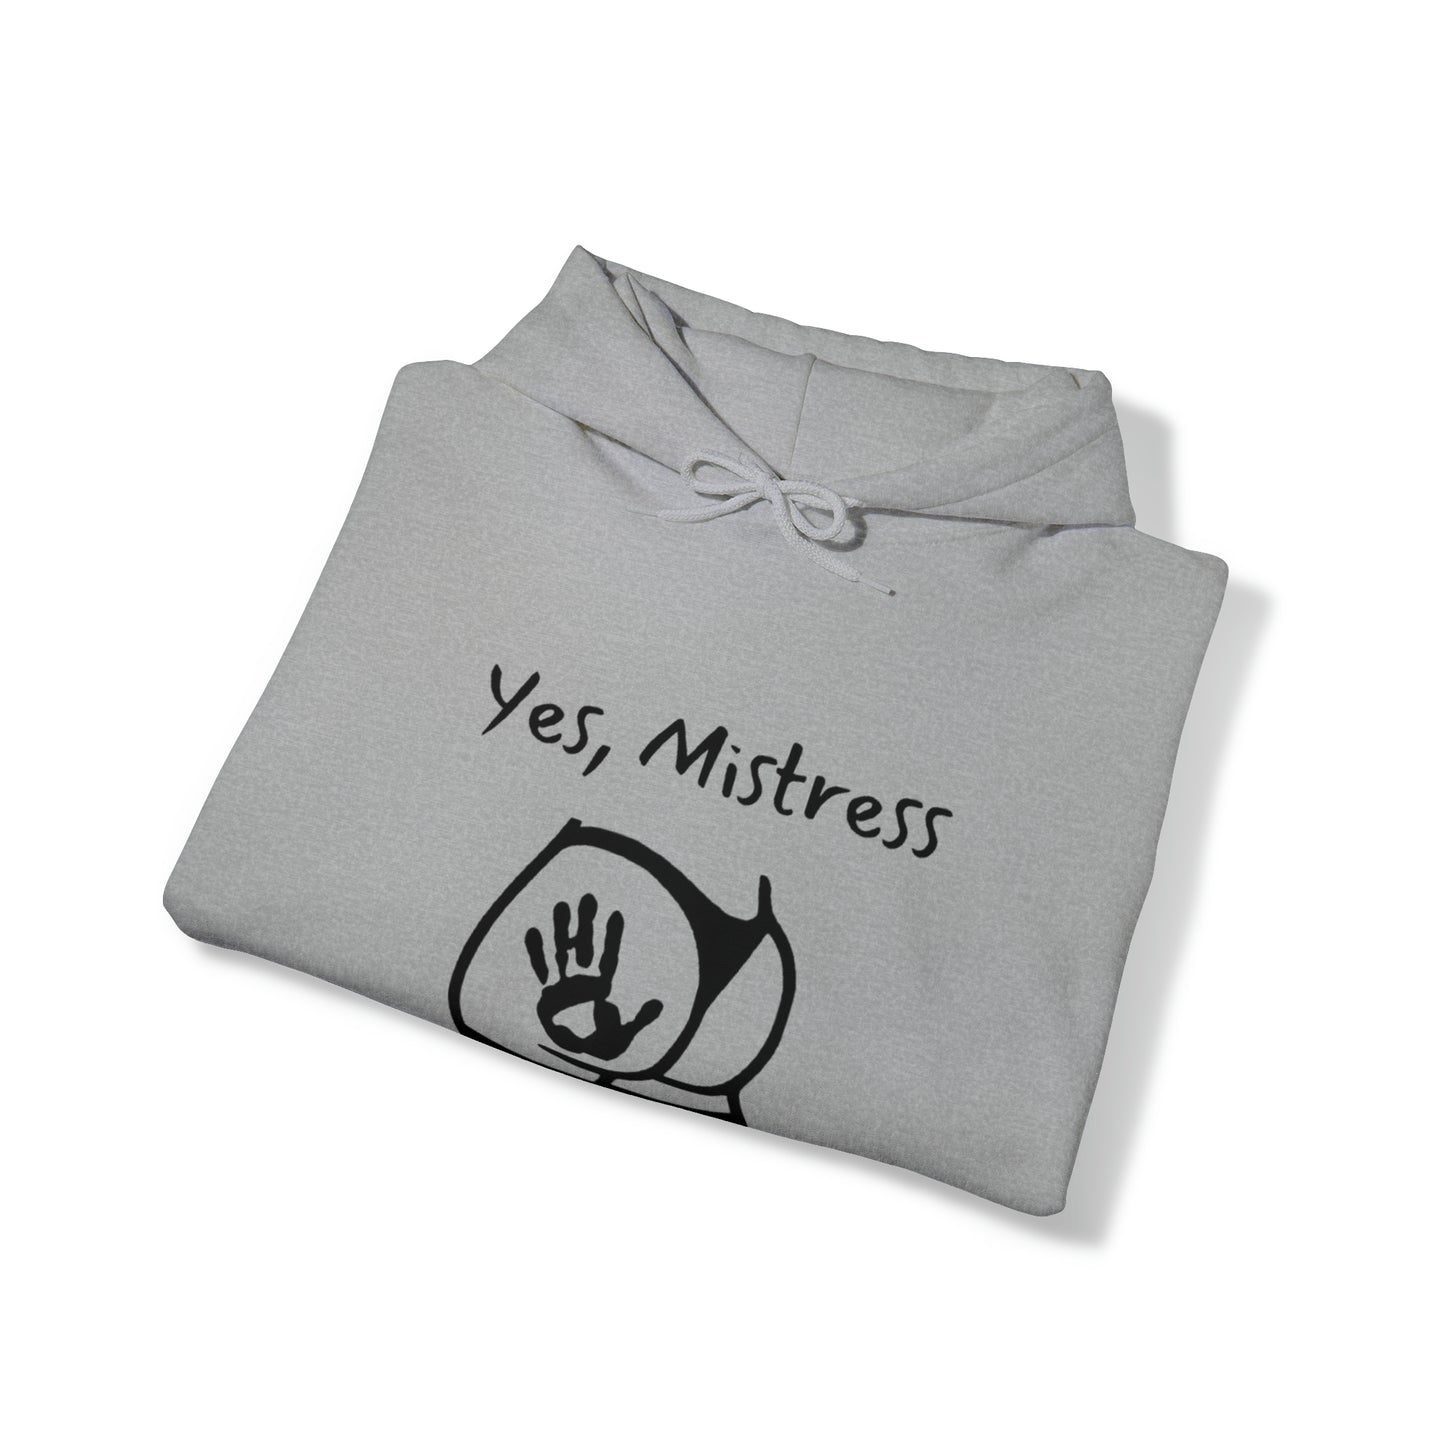 Yes, Mistress Unisex Hooded Sweatshirt